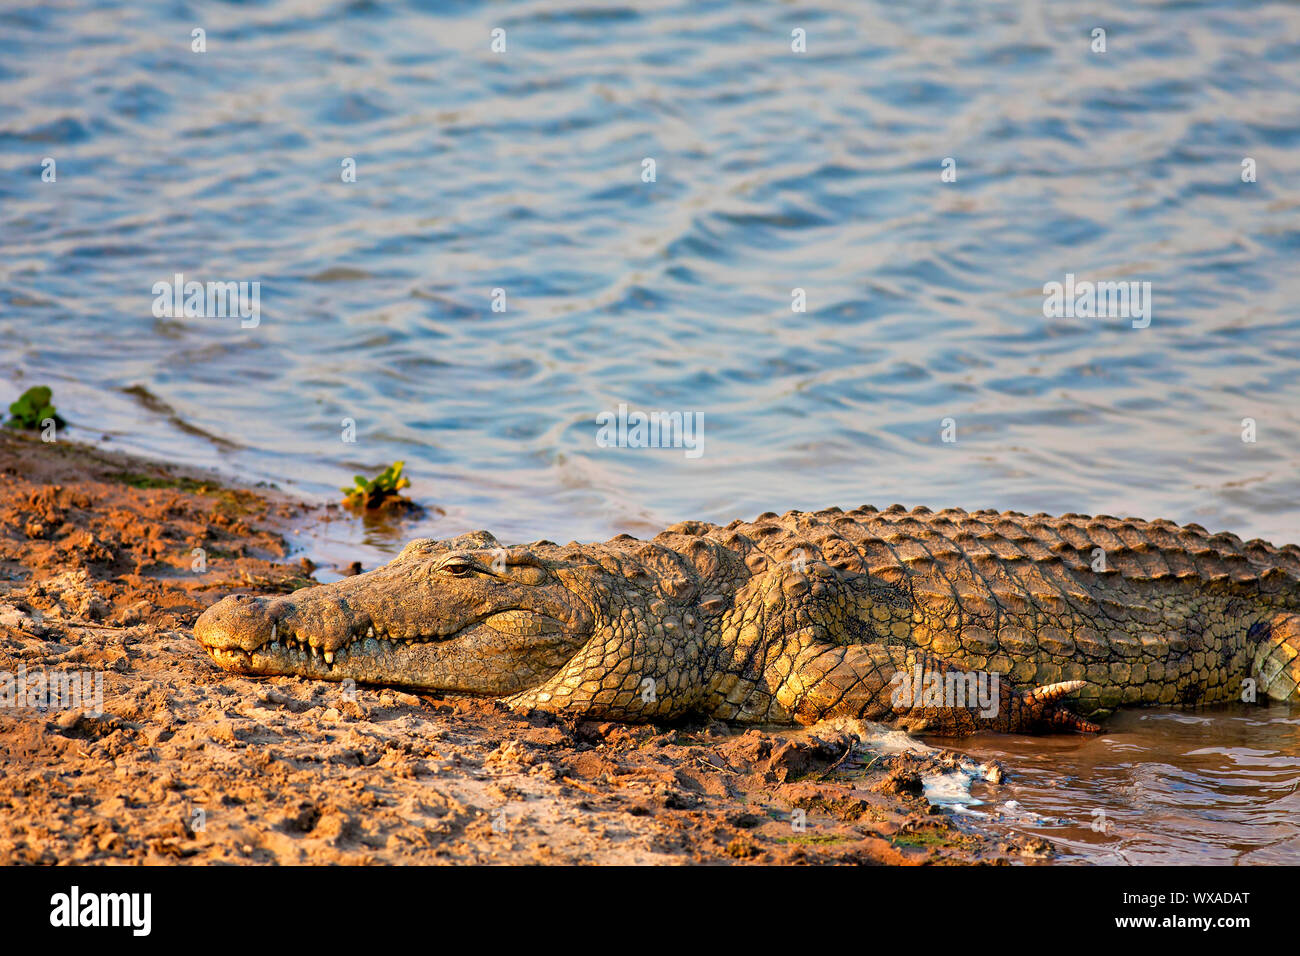 Nile Crocodile by the waterhole in the savannah, Mikumi Stock Photo